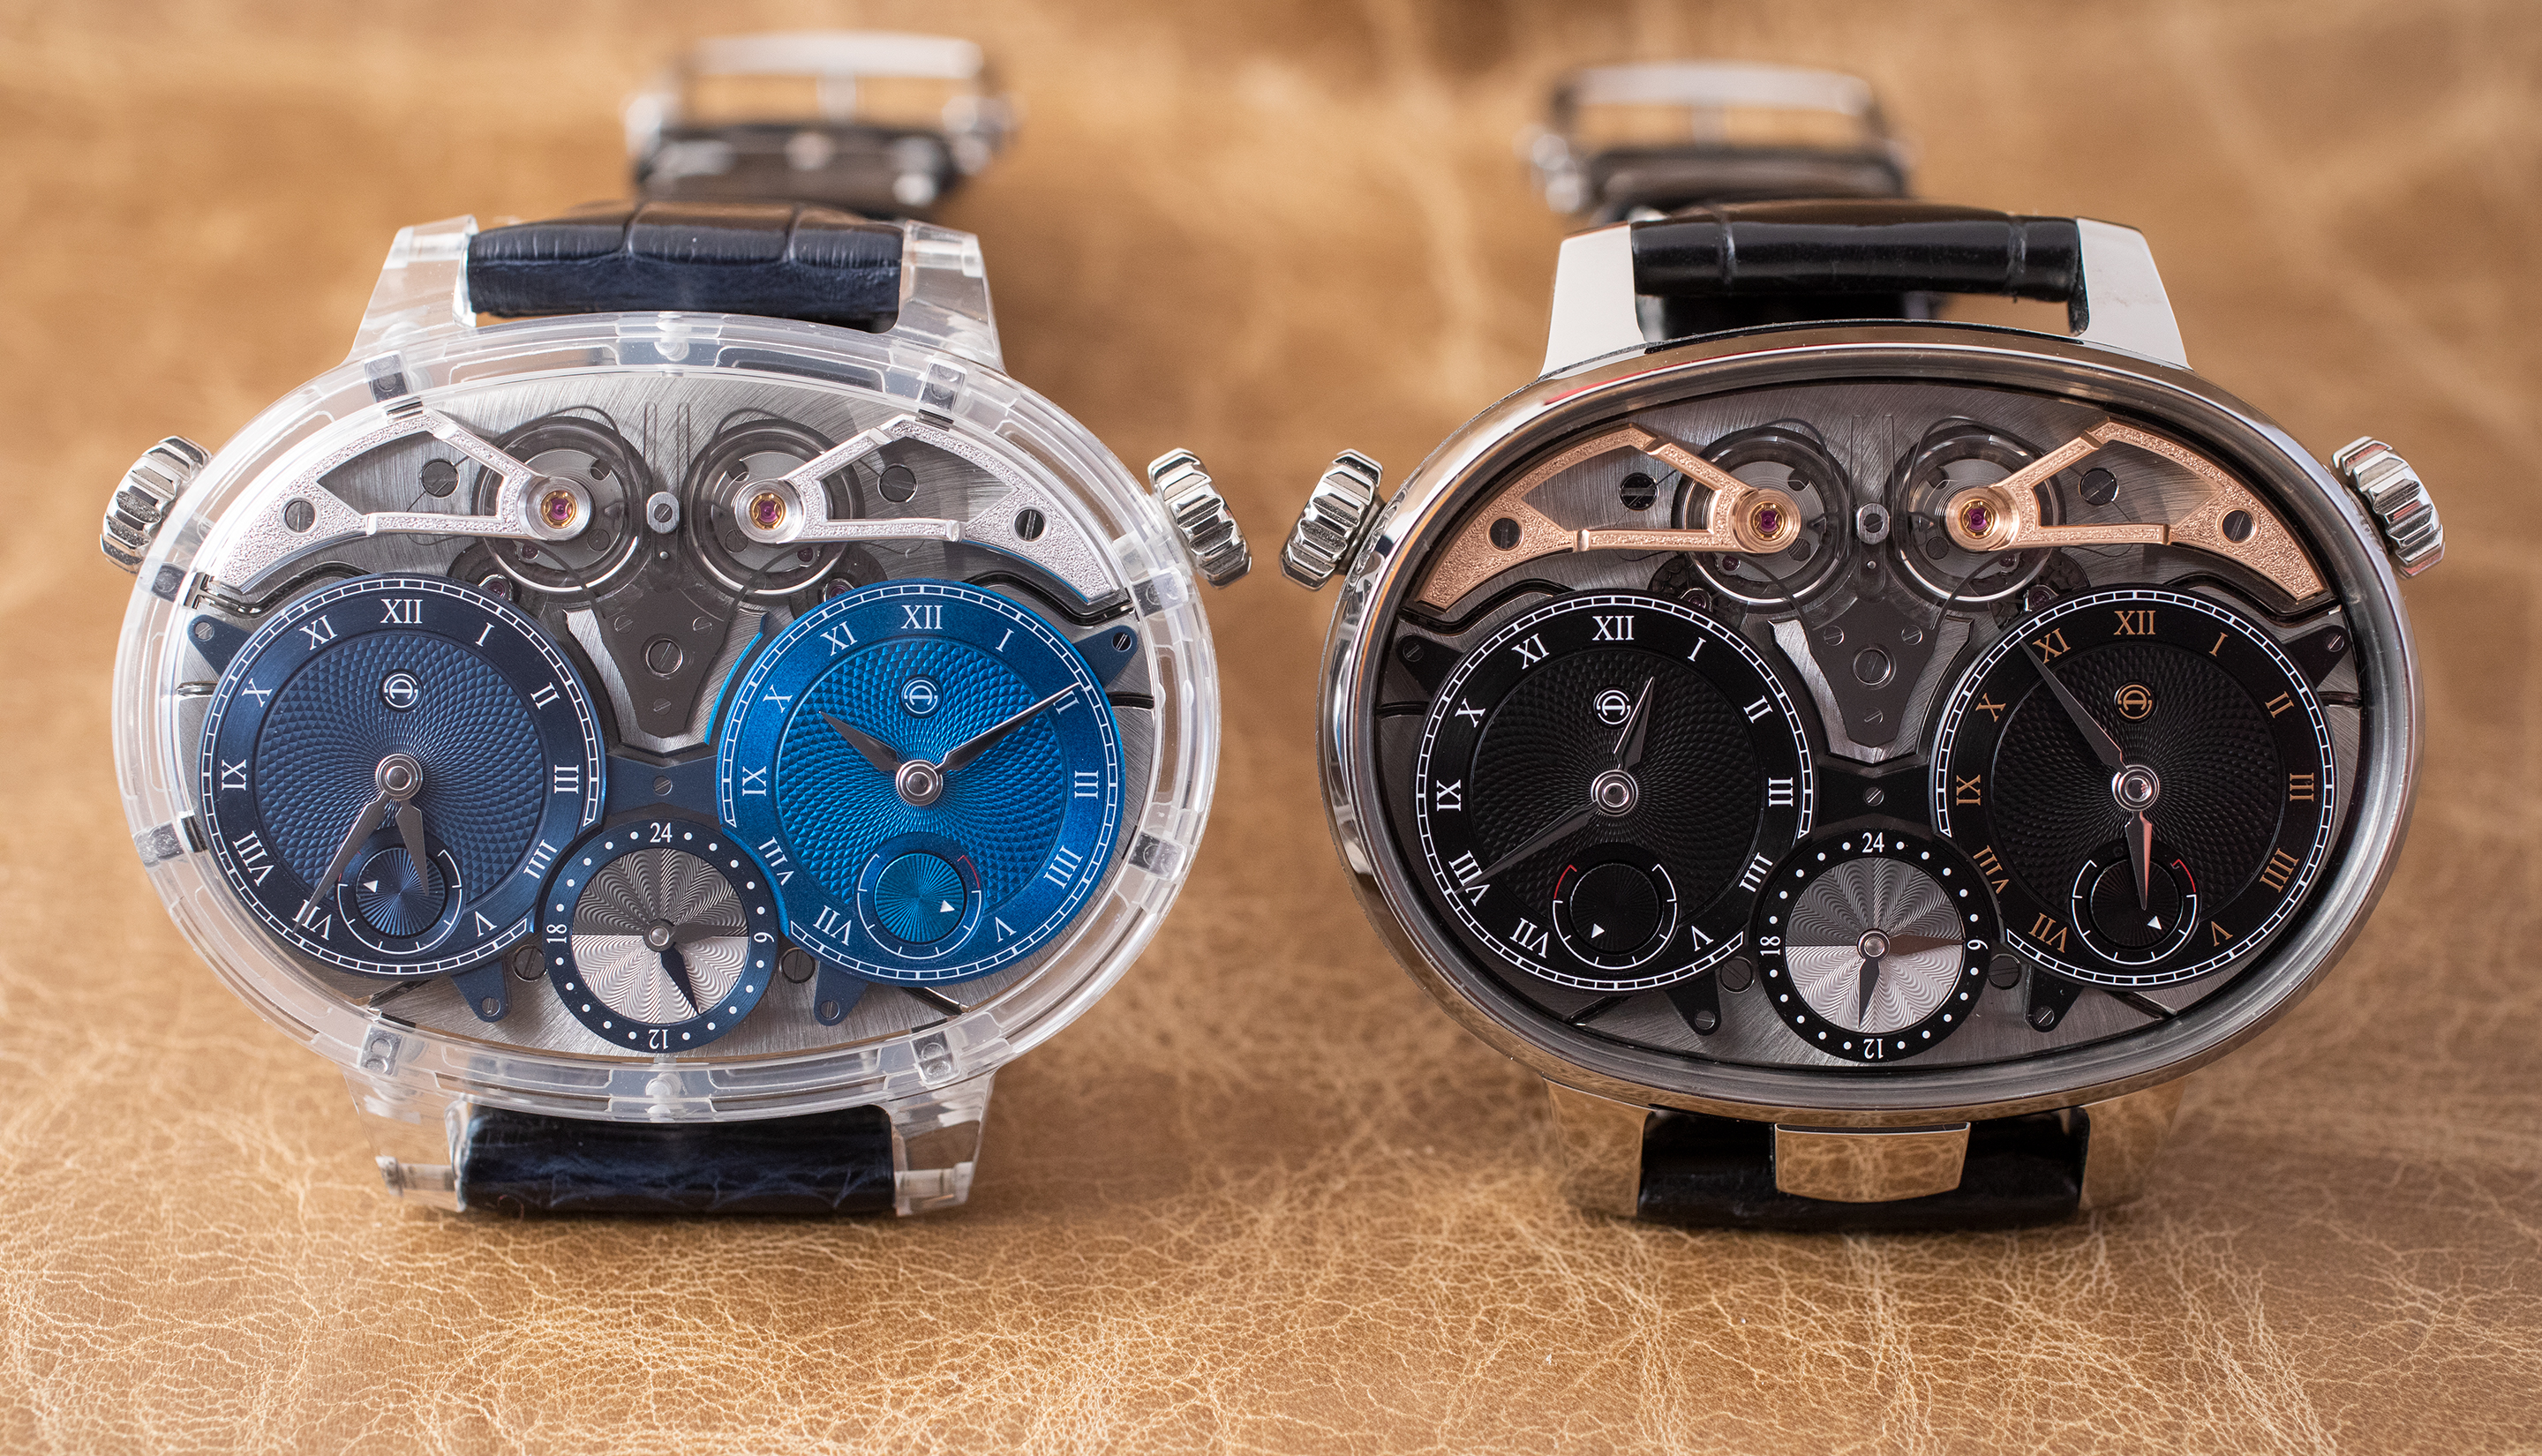 Women's wristwatch from Arminy, silver and gold - تسوقوا الان ساعات رجالية  وساعات نسائية ماركة أرميني بأفضل الأسعار